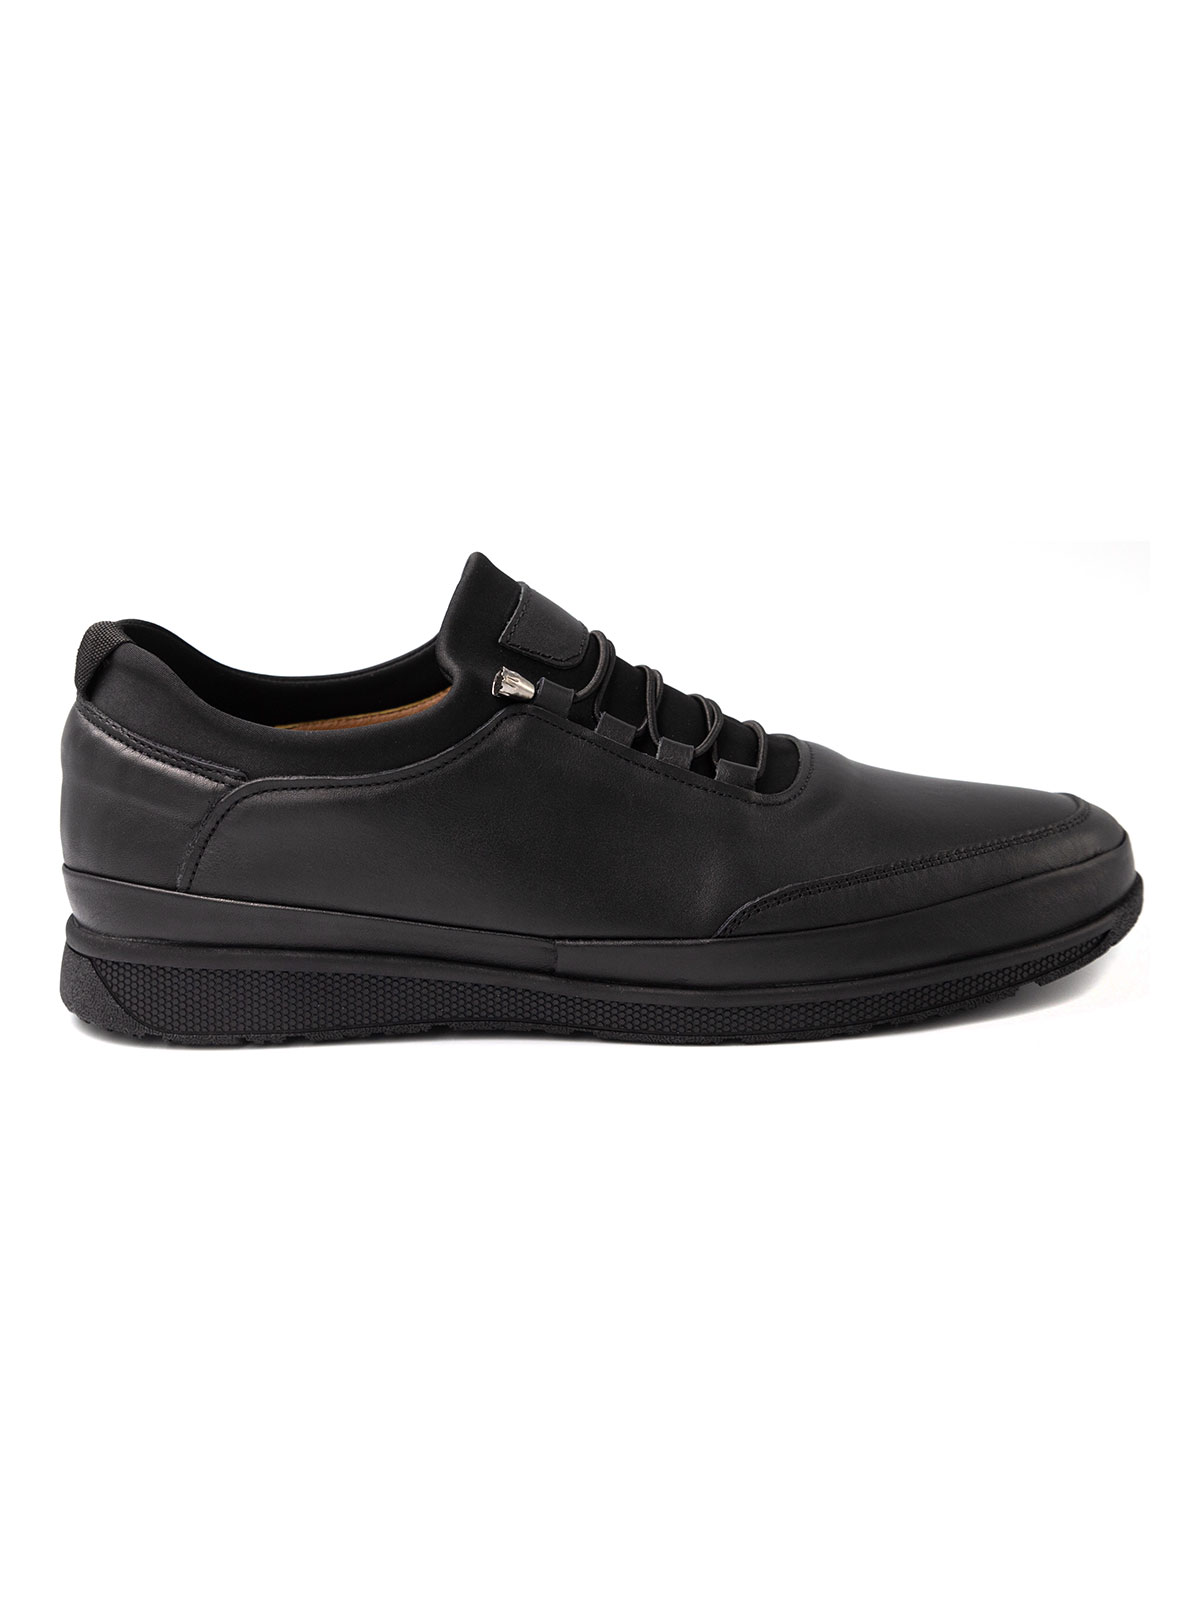 Pantofi din piele neagra cu sireturi ela - 81095 - € 41.62 img3